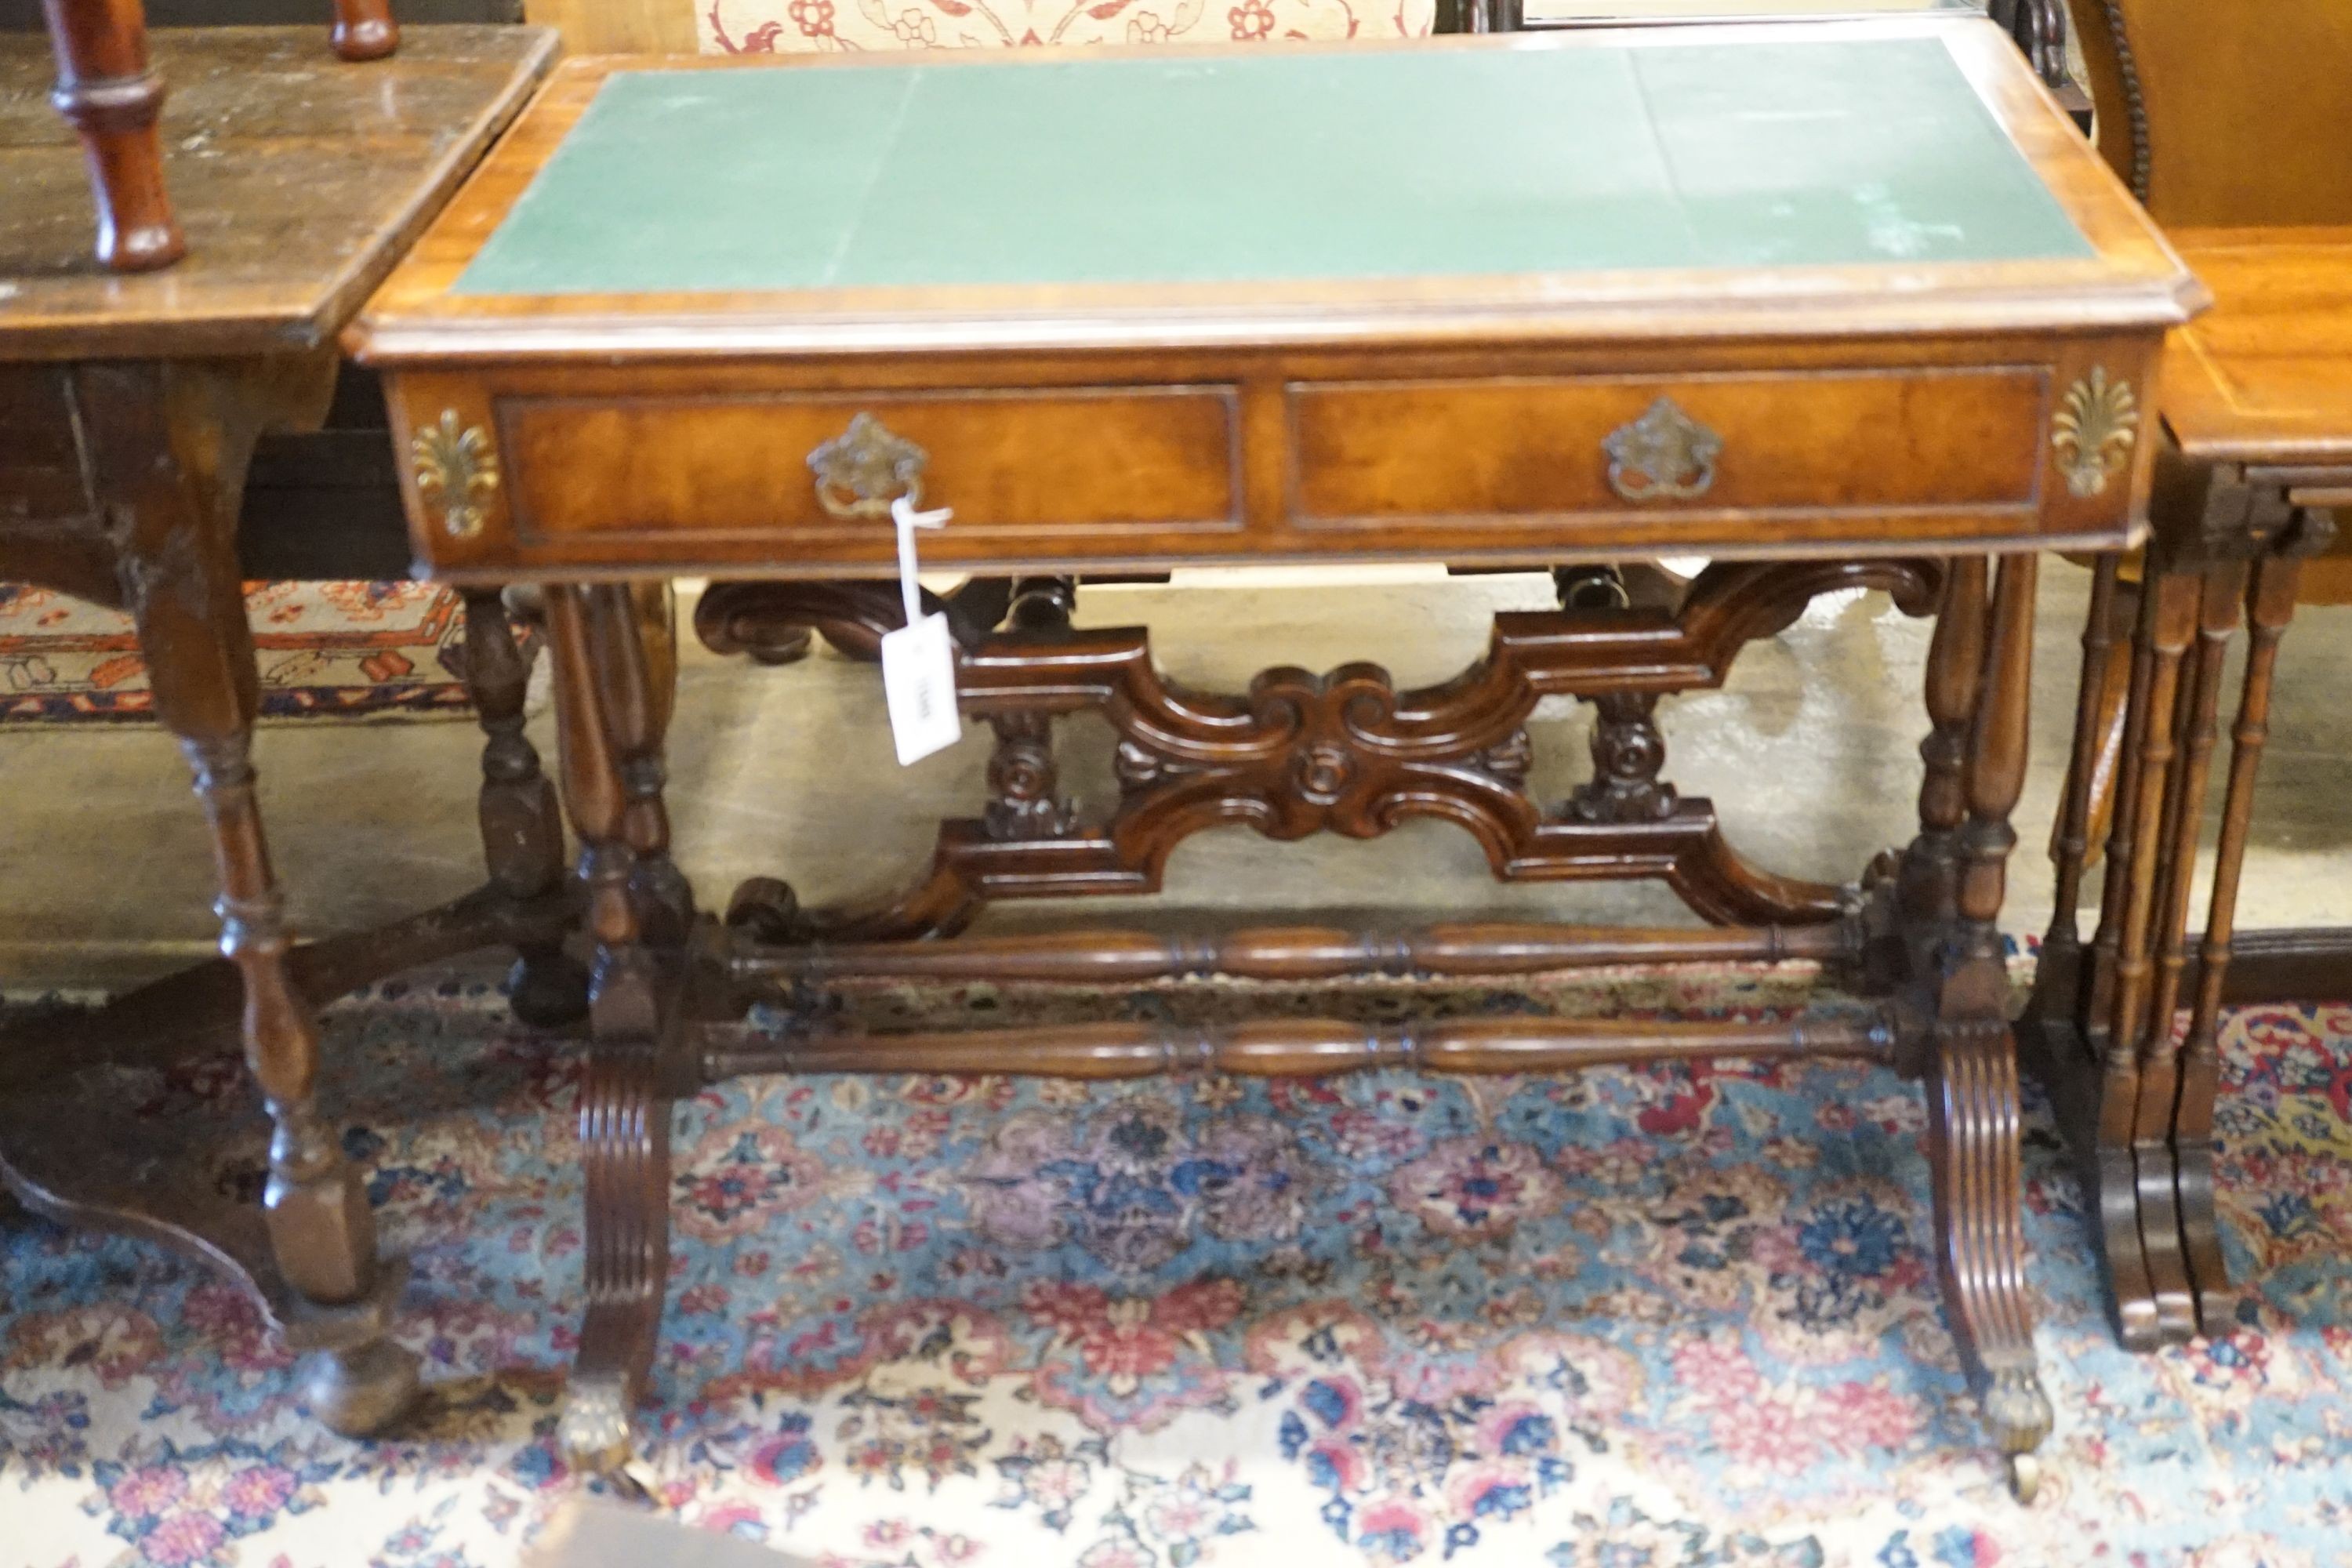 A Regency style rectangular mahogany writing table, width 89cm depth 50cm height 71cm